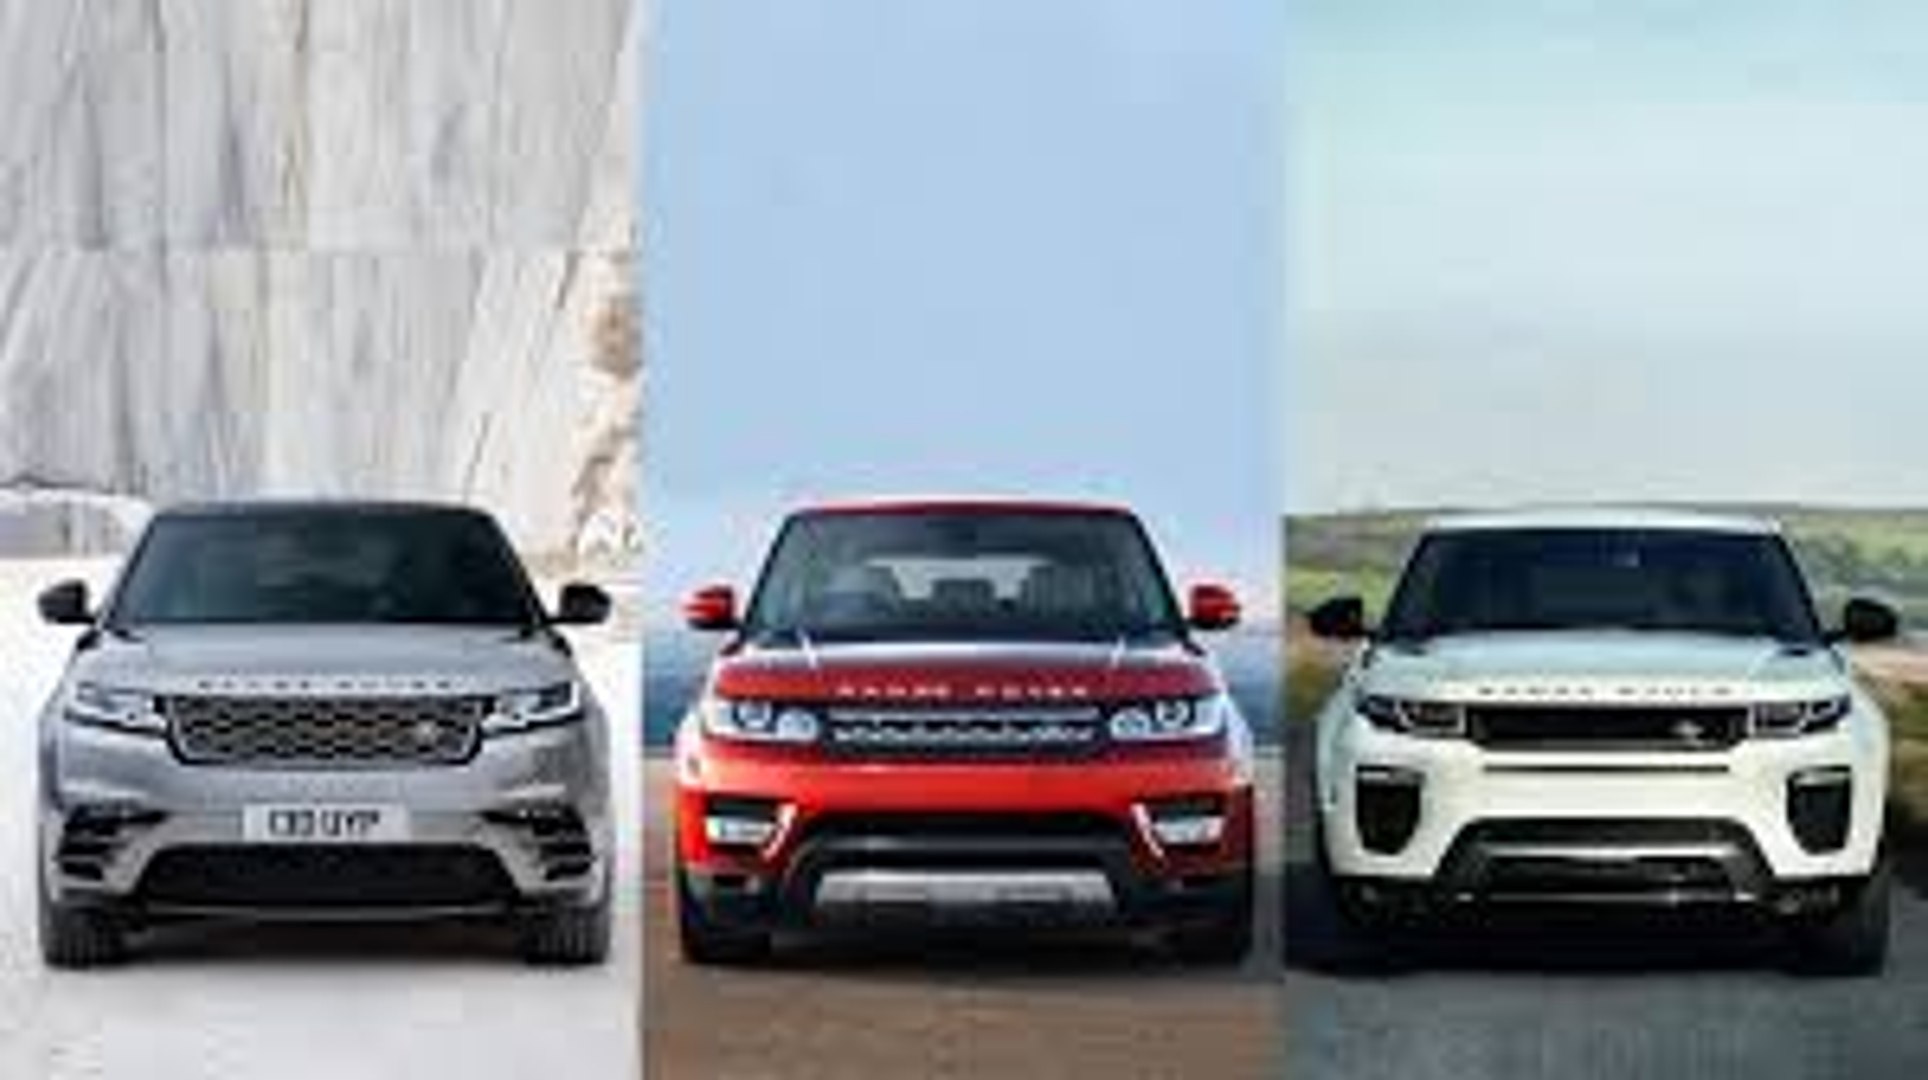 Aprendiz Moderar al exilio Range Rover Velar VS Range Rover Sport VS Range Rover - Dailymotion Video